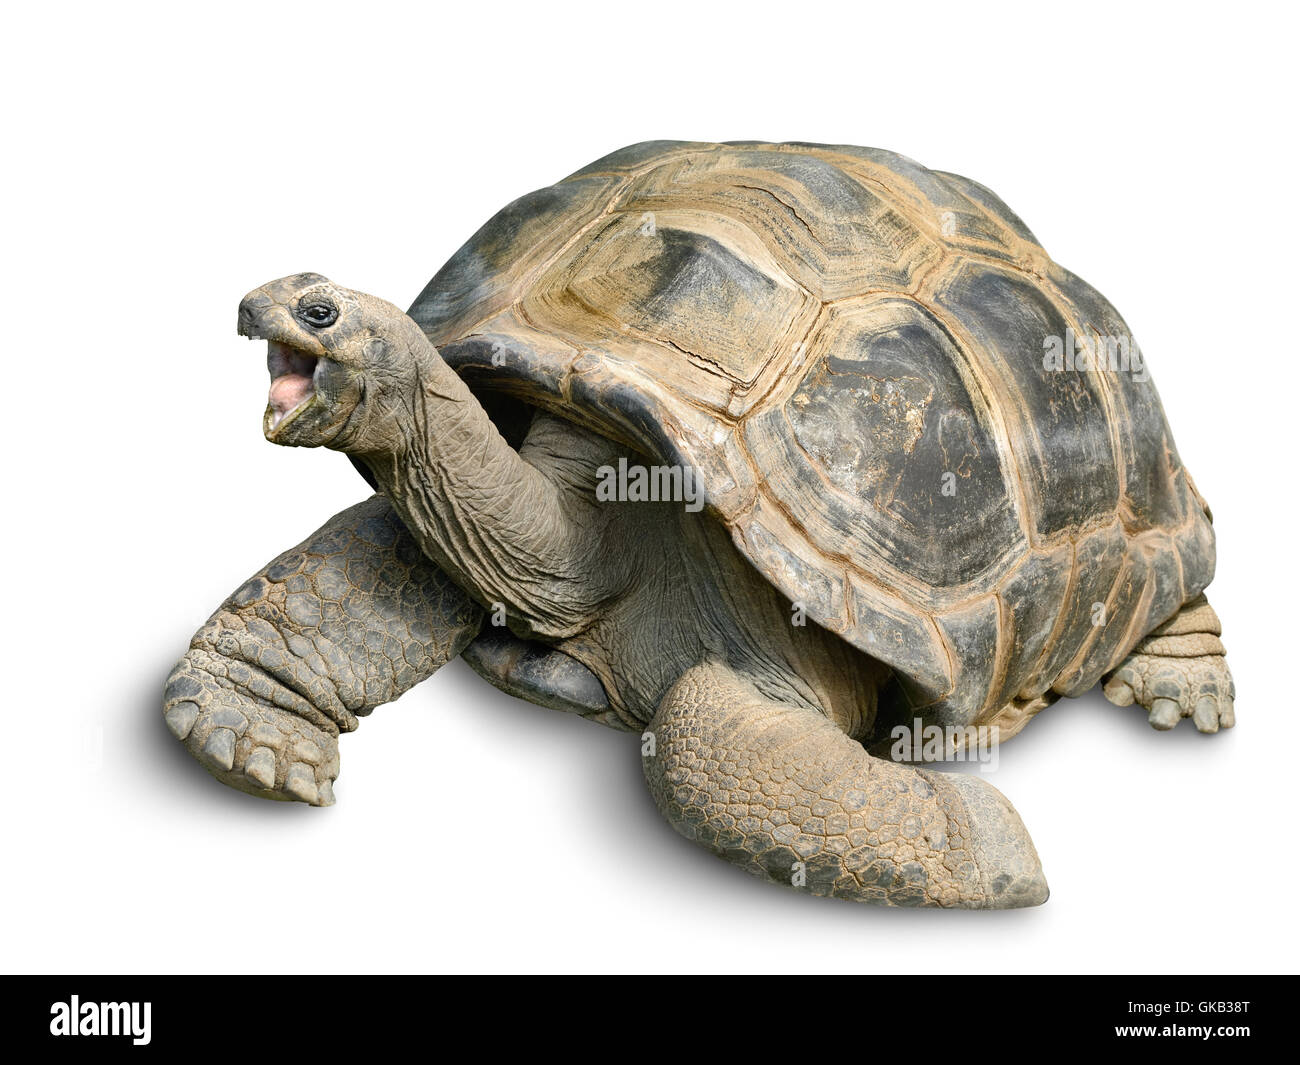 animal portrait of a giant tortoise Stock Photo